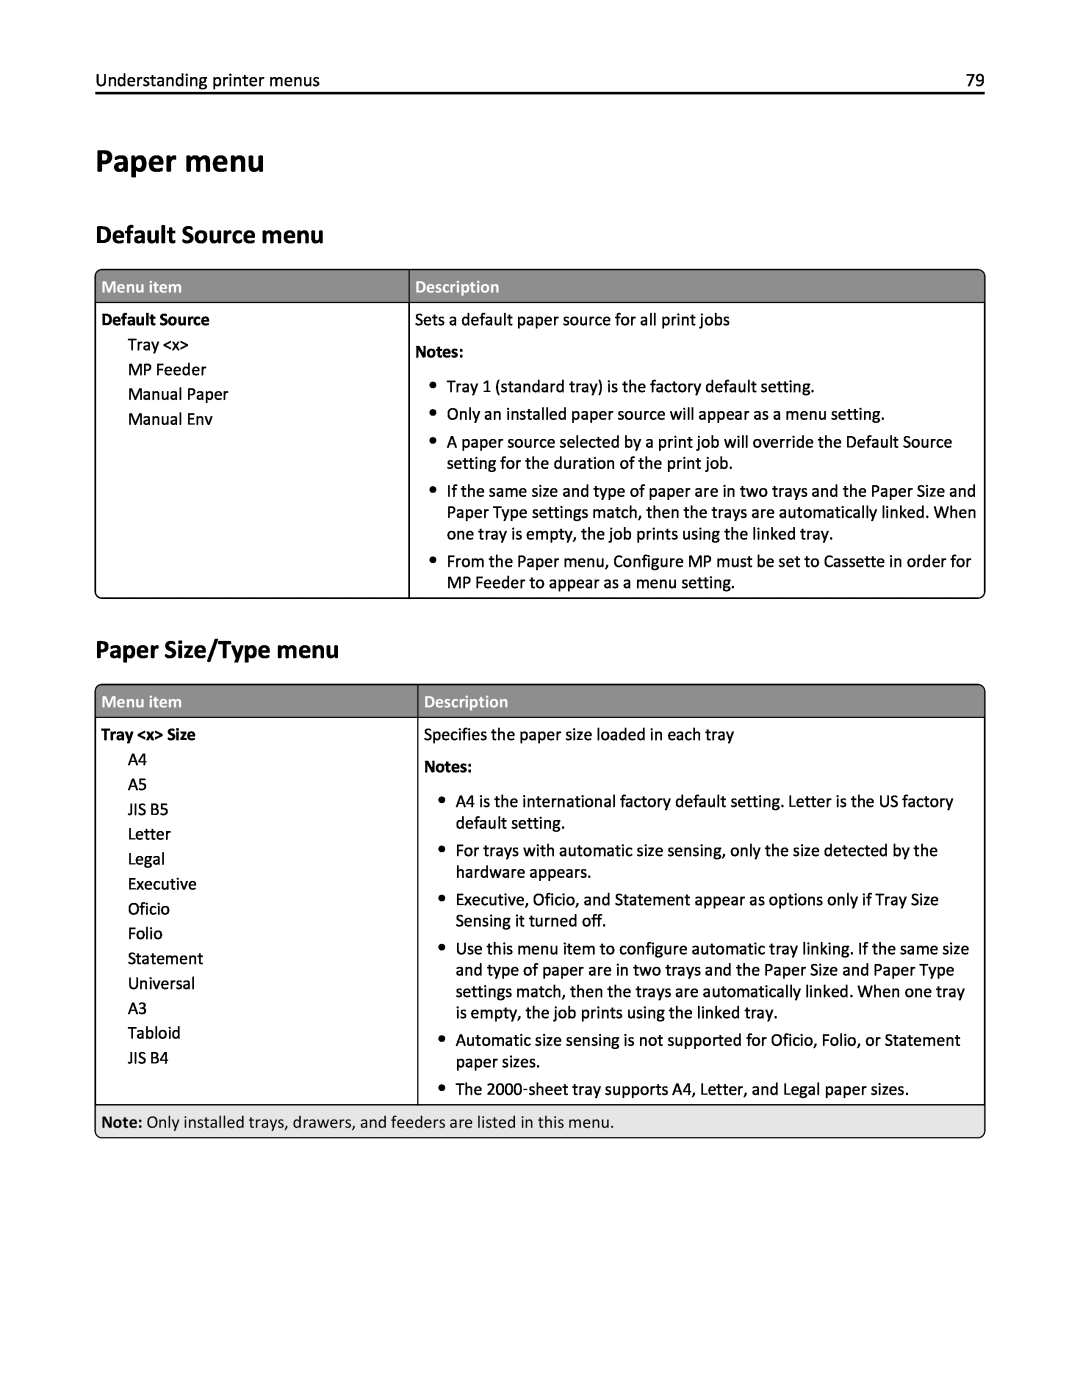 Lexmark W850DN, 110, 19Z0301 manual Paper menu, Default Source menu, Paper Size/Type menu, Menu item, Description 